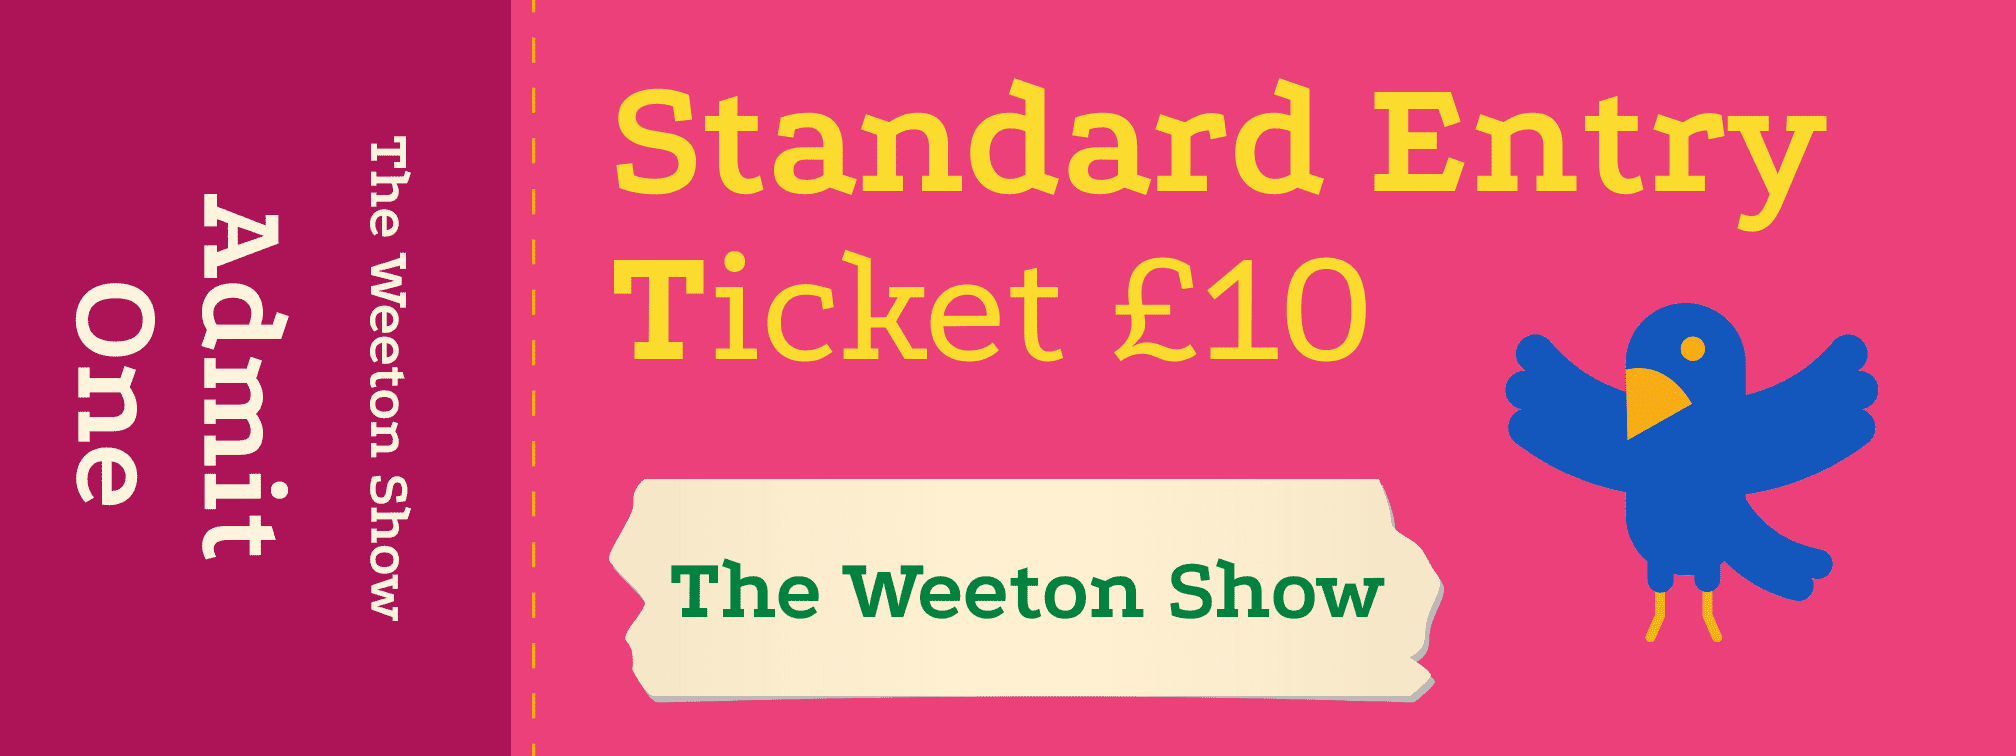 Weeton Show Standard Entry Ticket